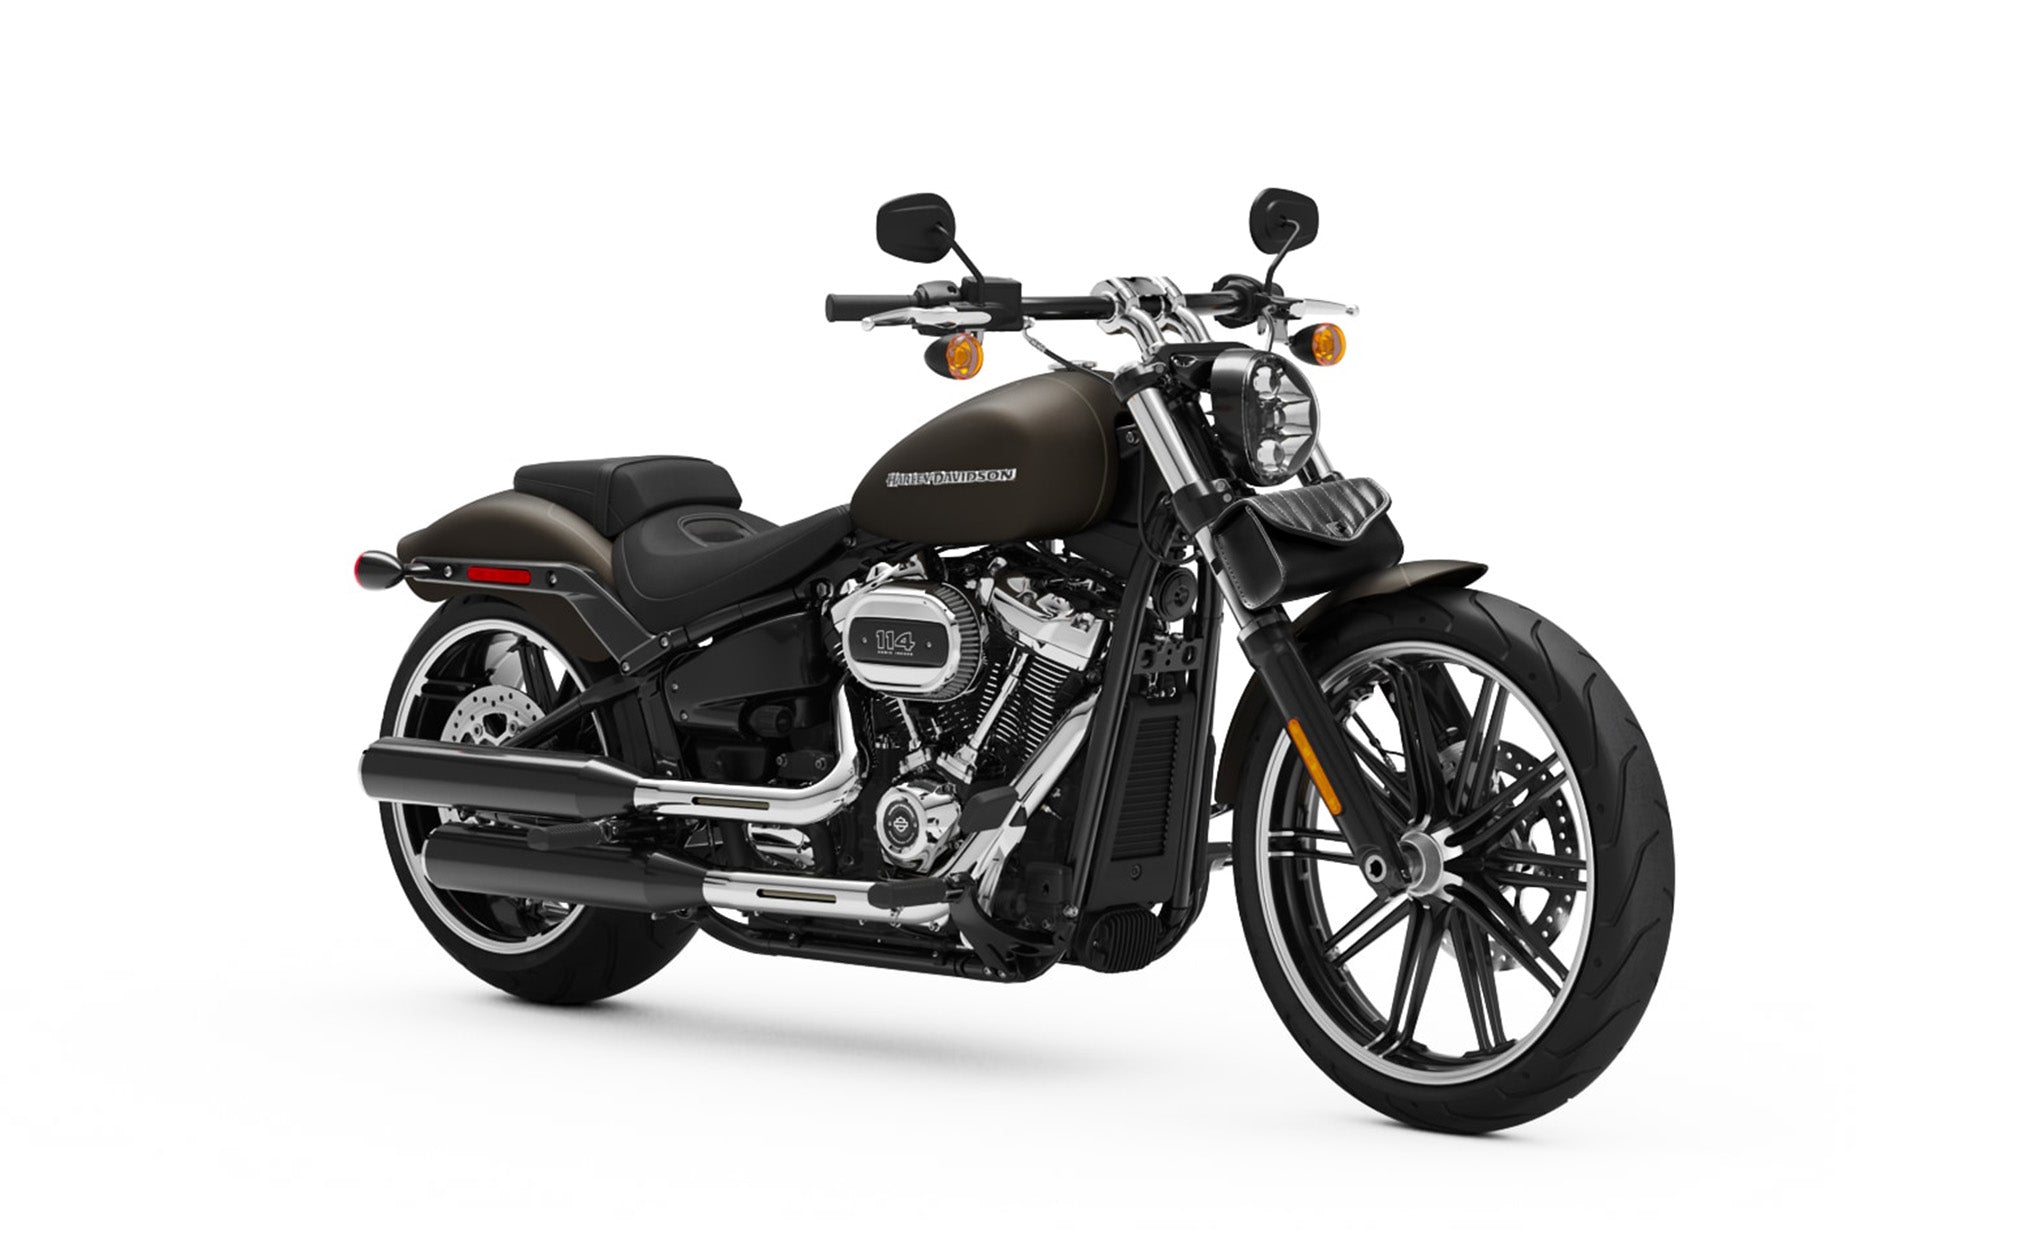 Viking Iron Born Vertical Stitch Leather Motorcycle Handlebar Bag for Harley Davidson Bag on Bike View @expand